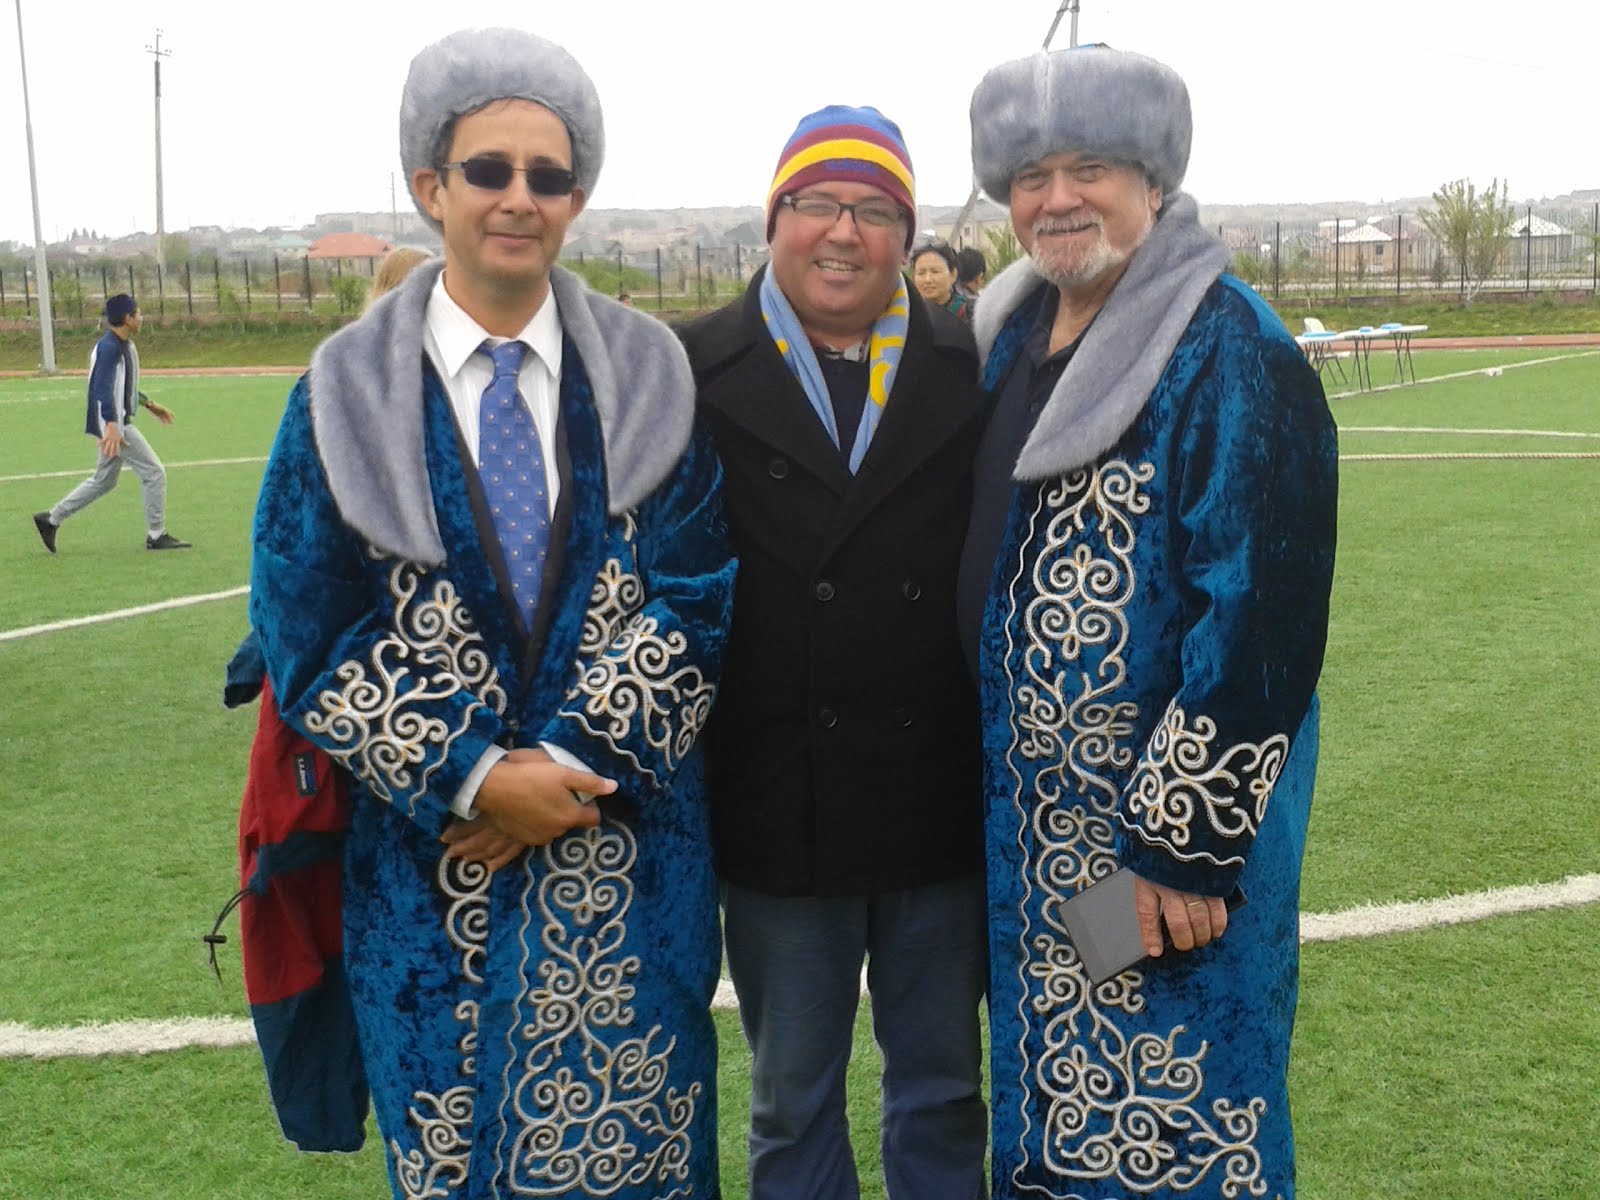 International teachers Yassine and Murray in traditional Kazakh dress